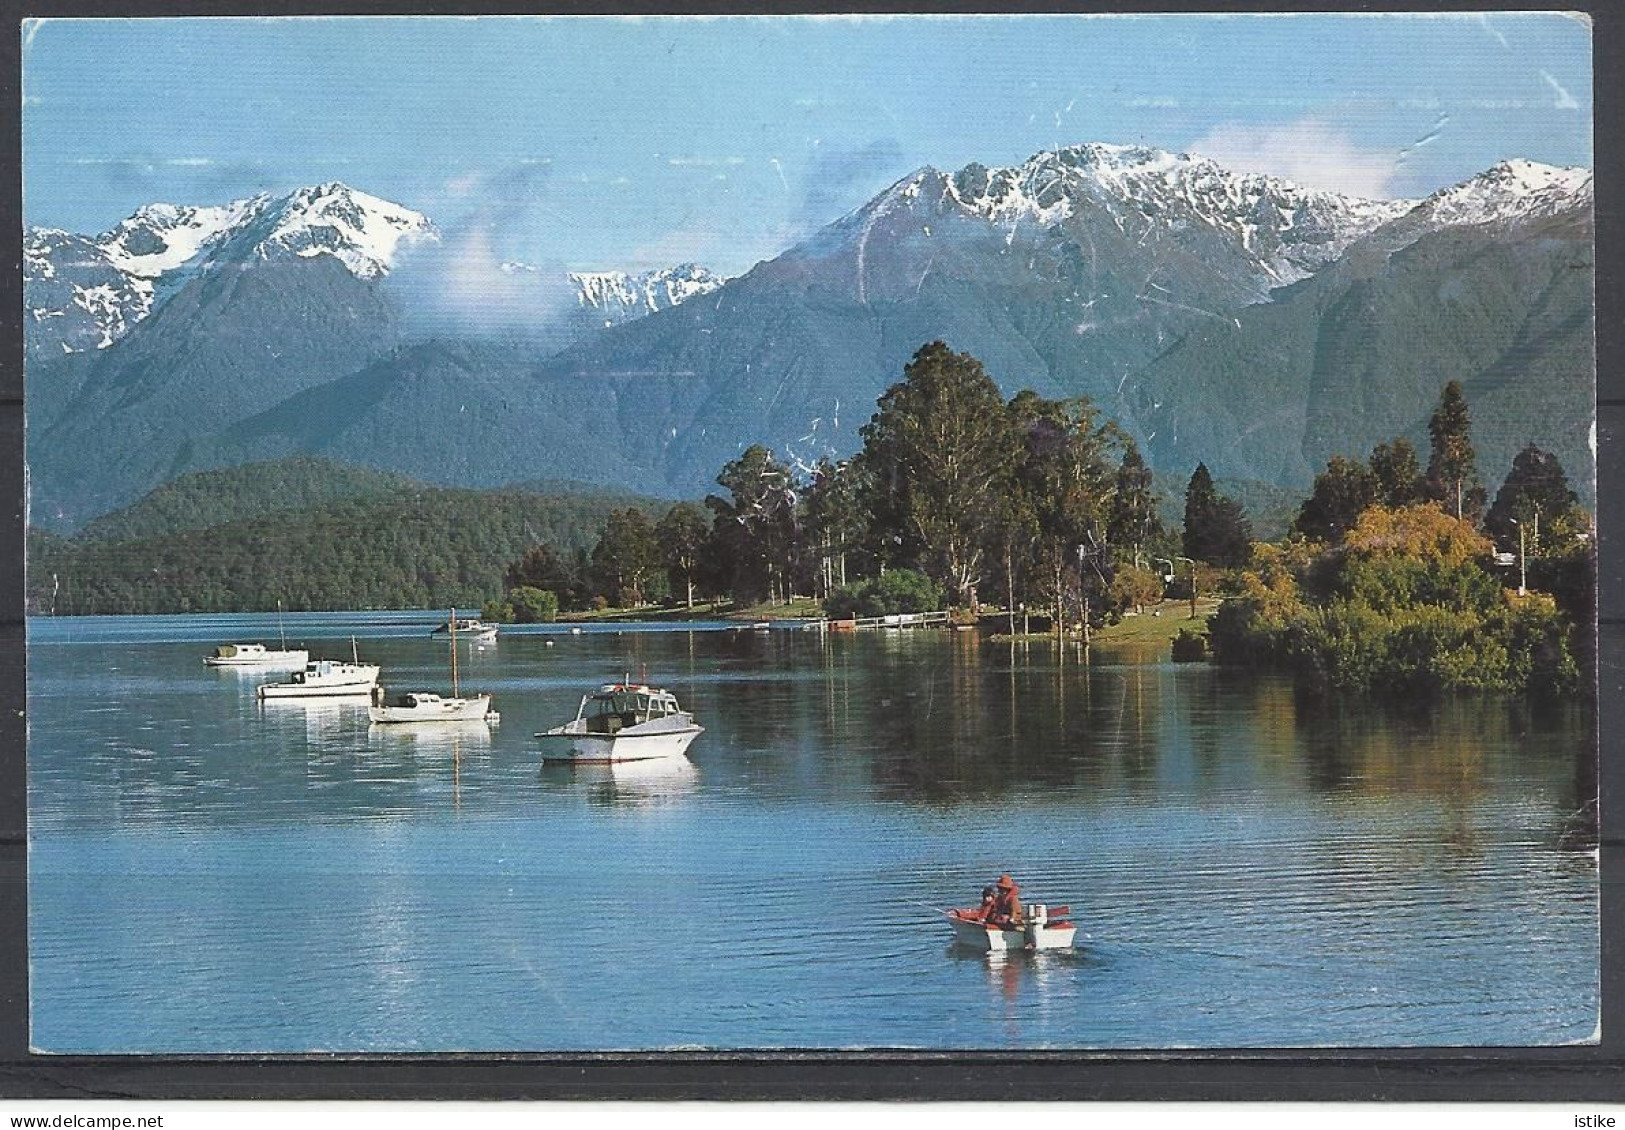 New Zealand, Lake Te Anau, Nice Stamp, Airmail Label,1987. - New Zealand